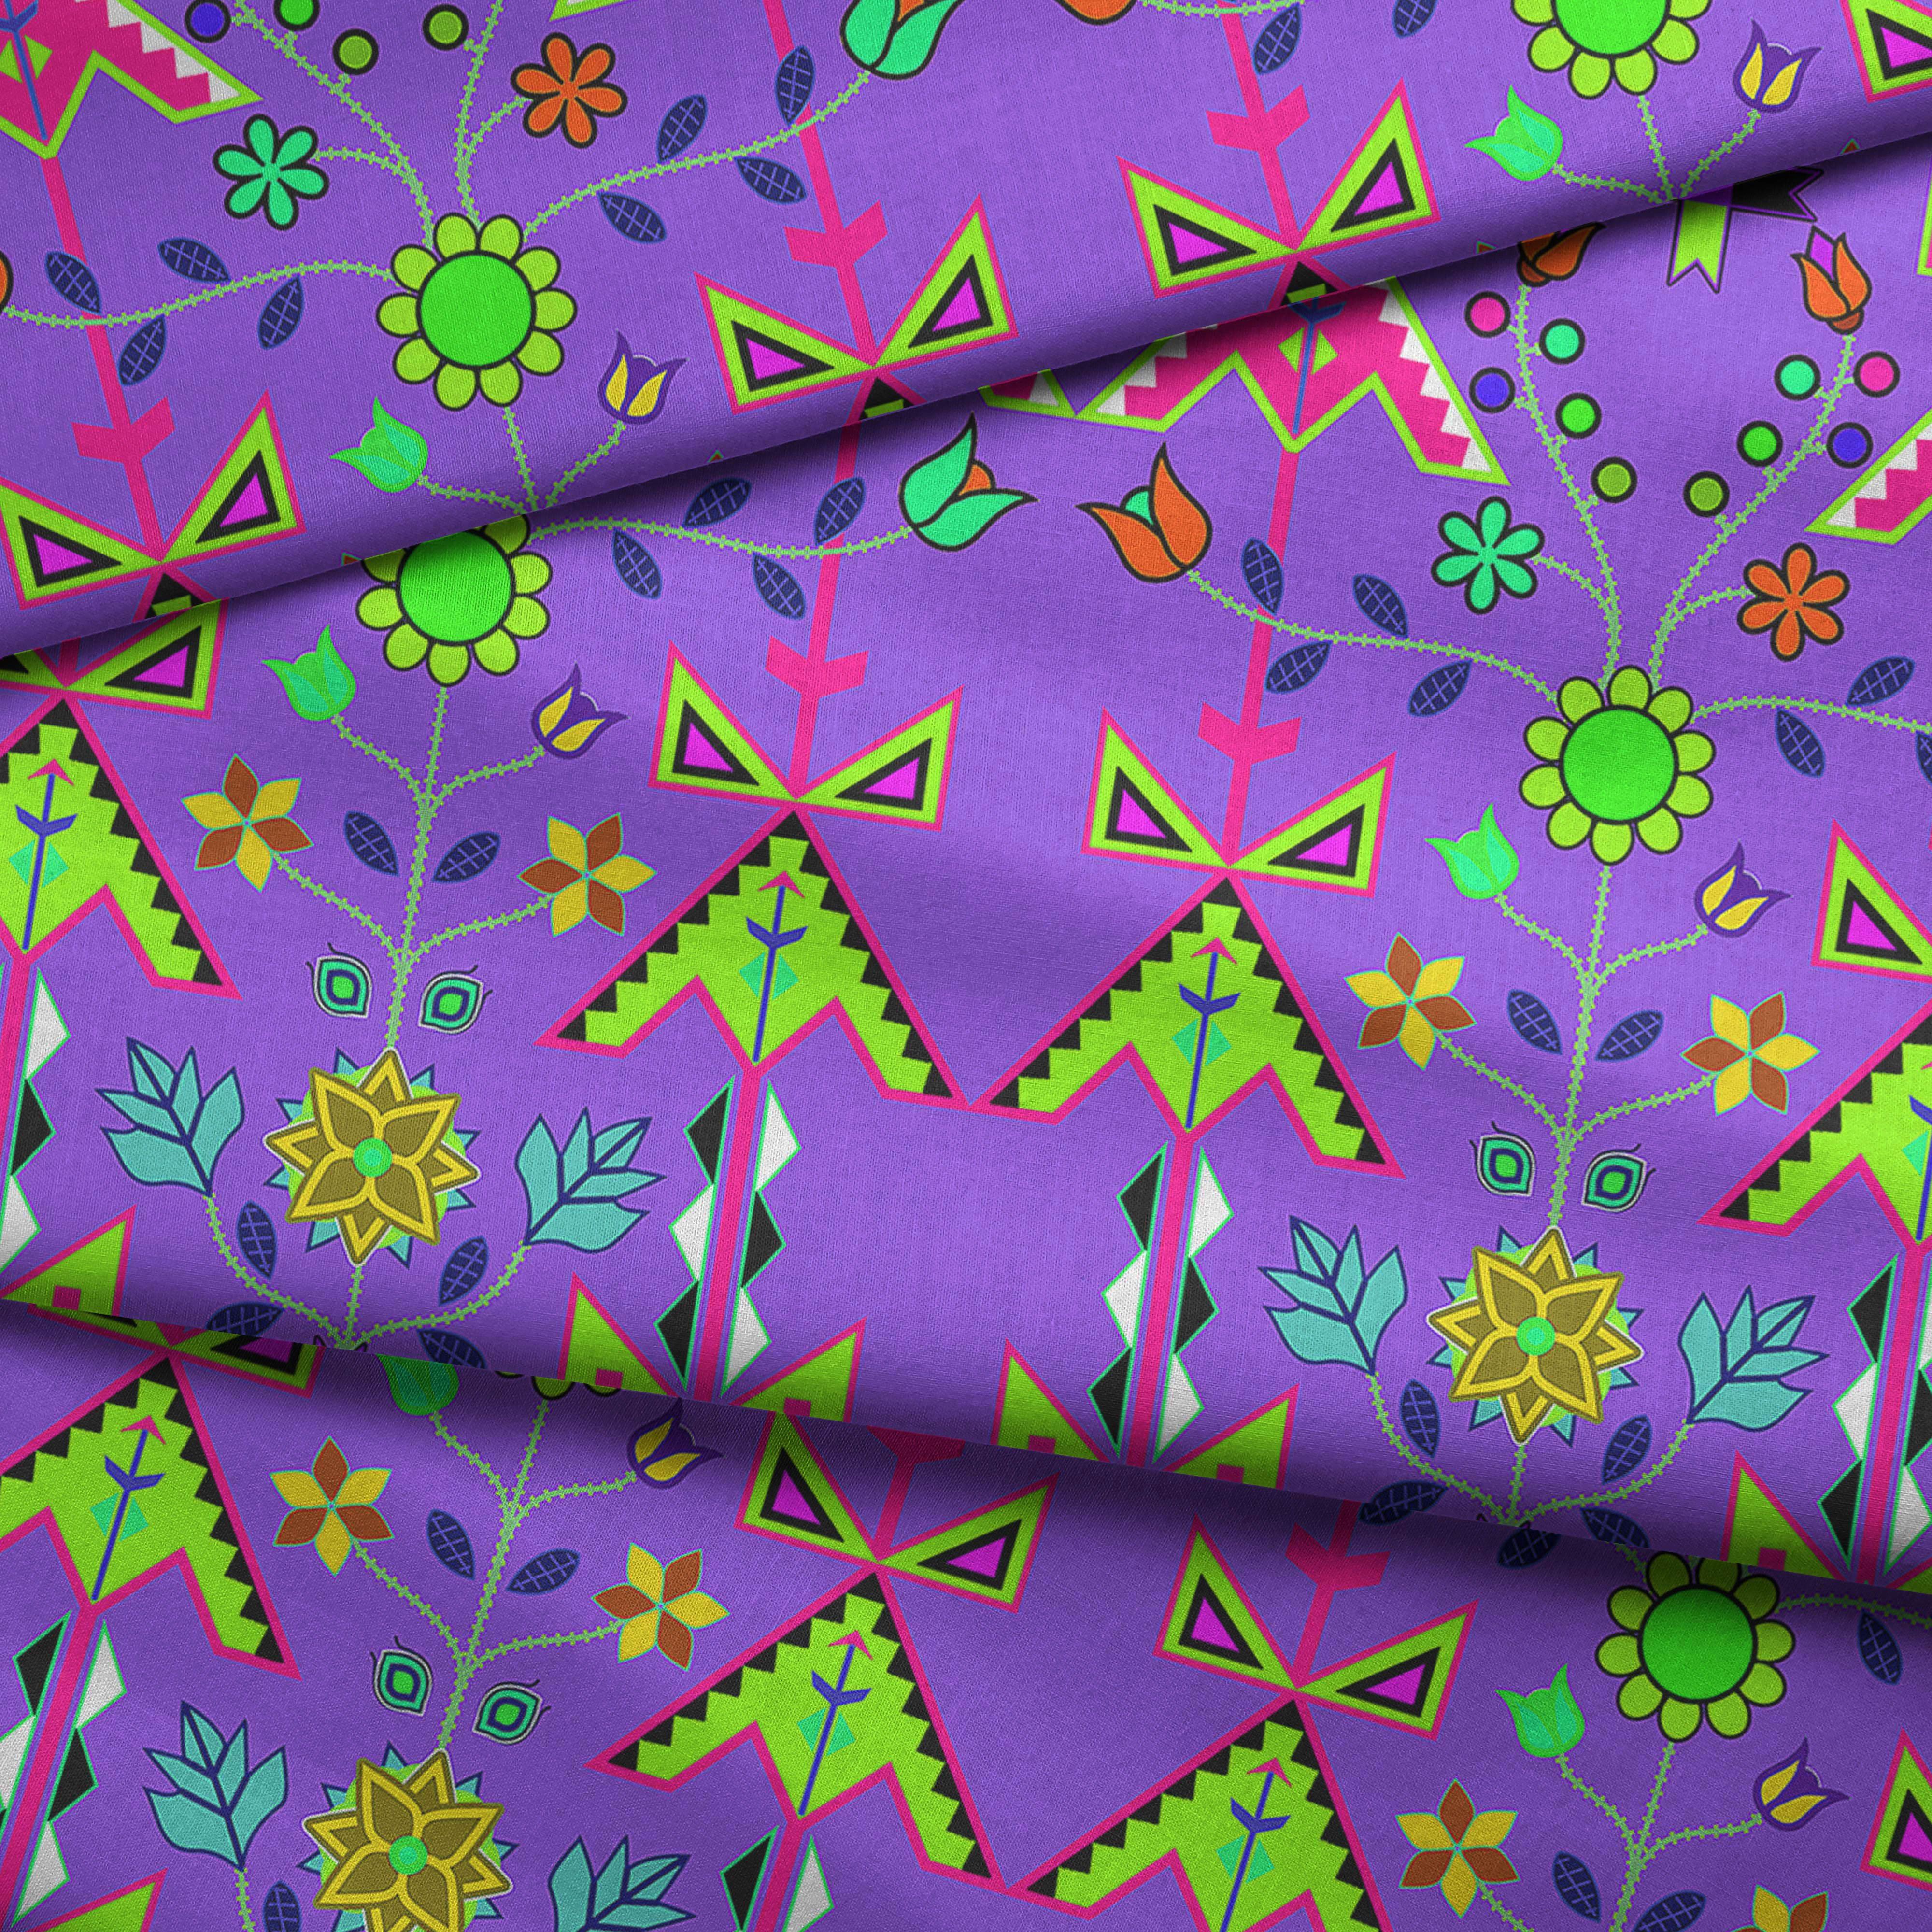 Itaopi Lavendar Fabric by the Yard 49 Dzine 